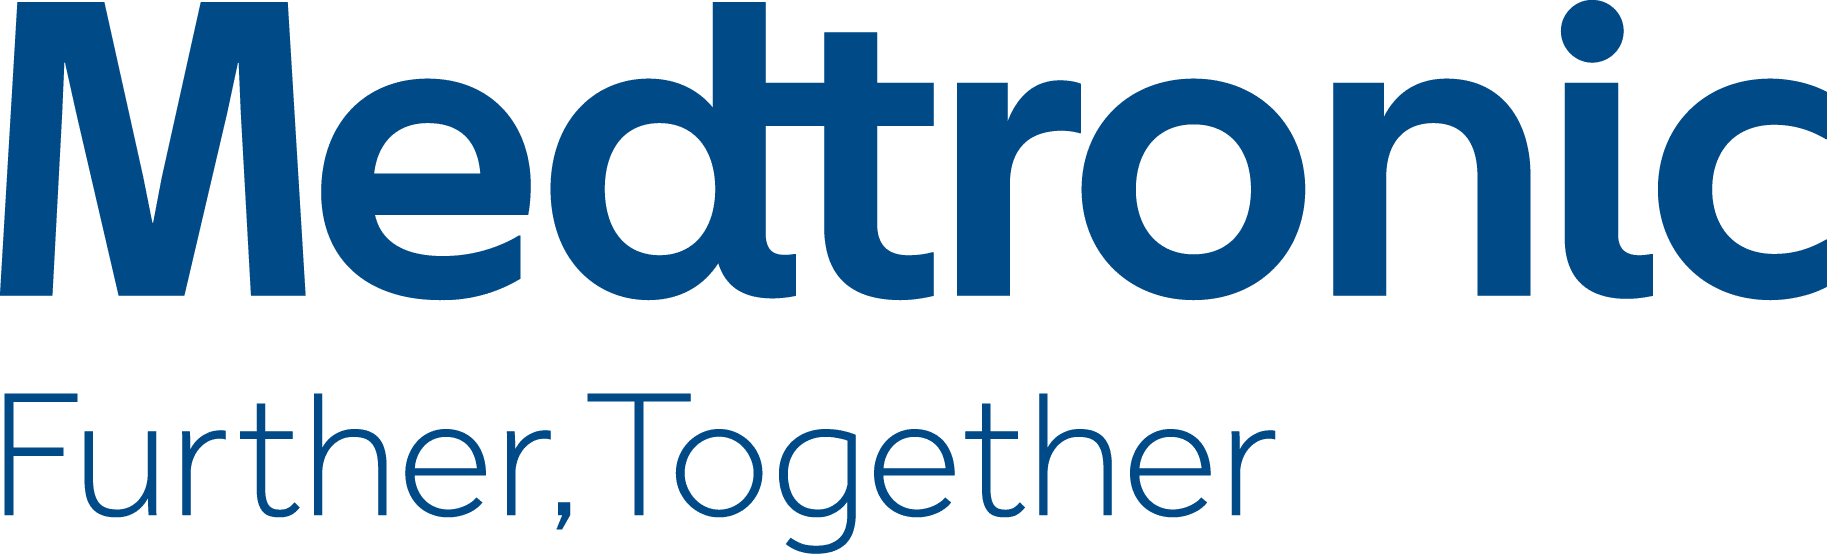 Medtronic - logo_tagline_rgb_png